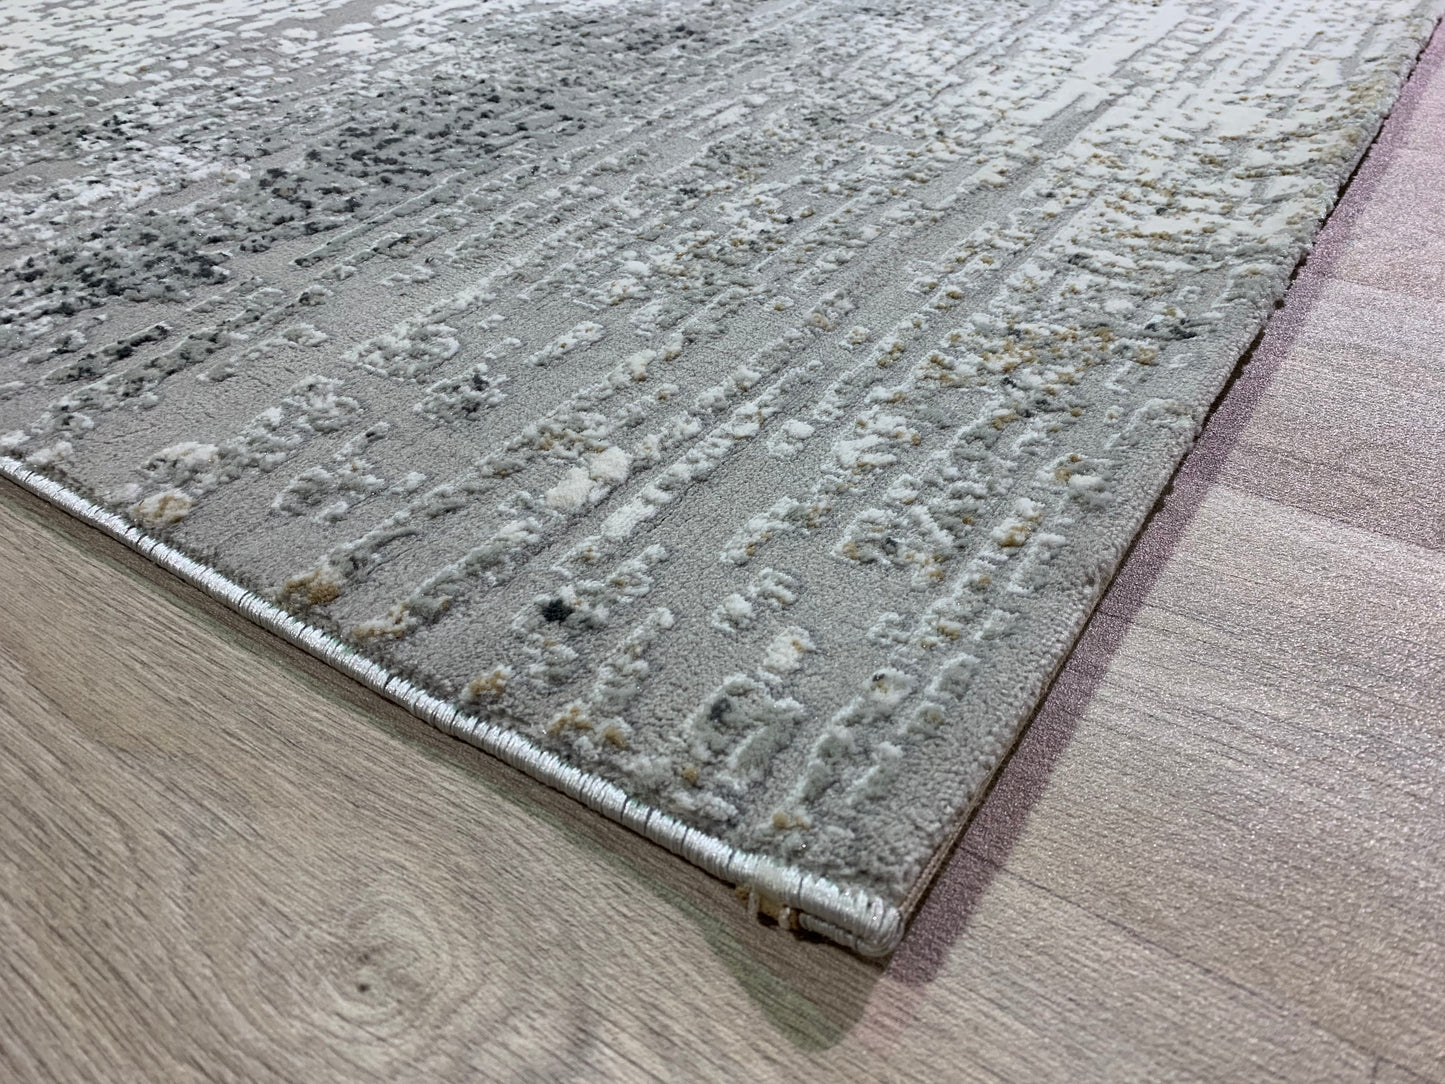 SP-201: Synthetic fiber rug